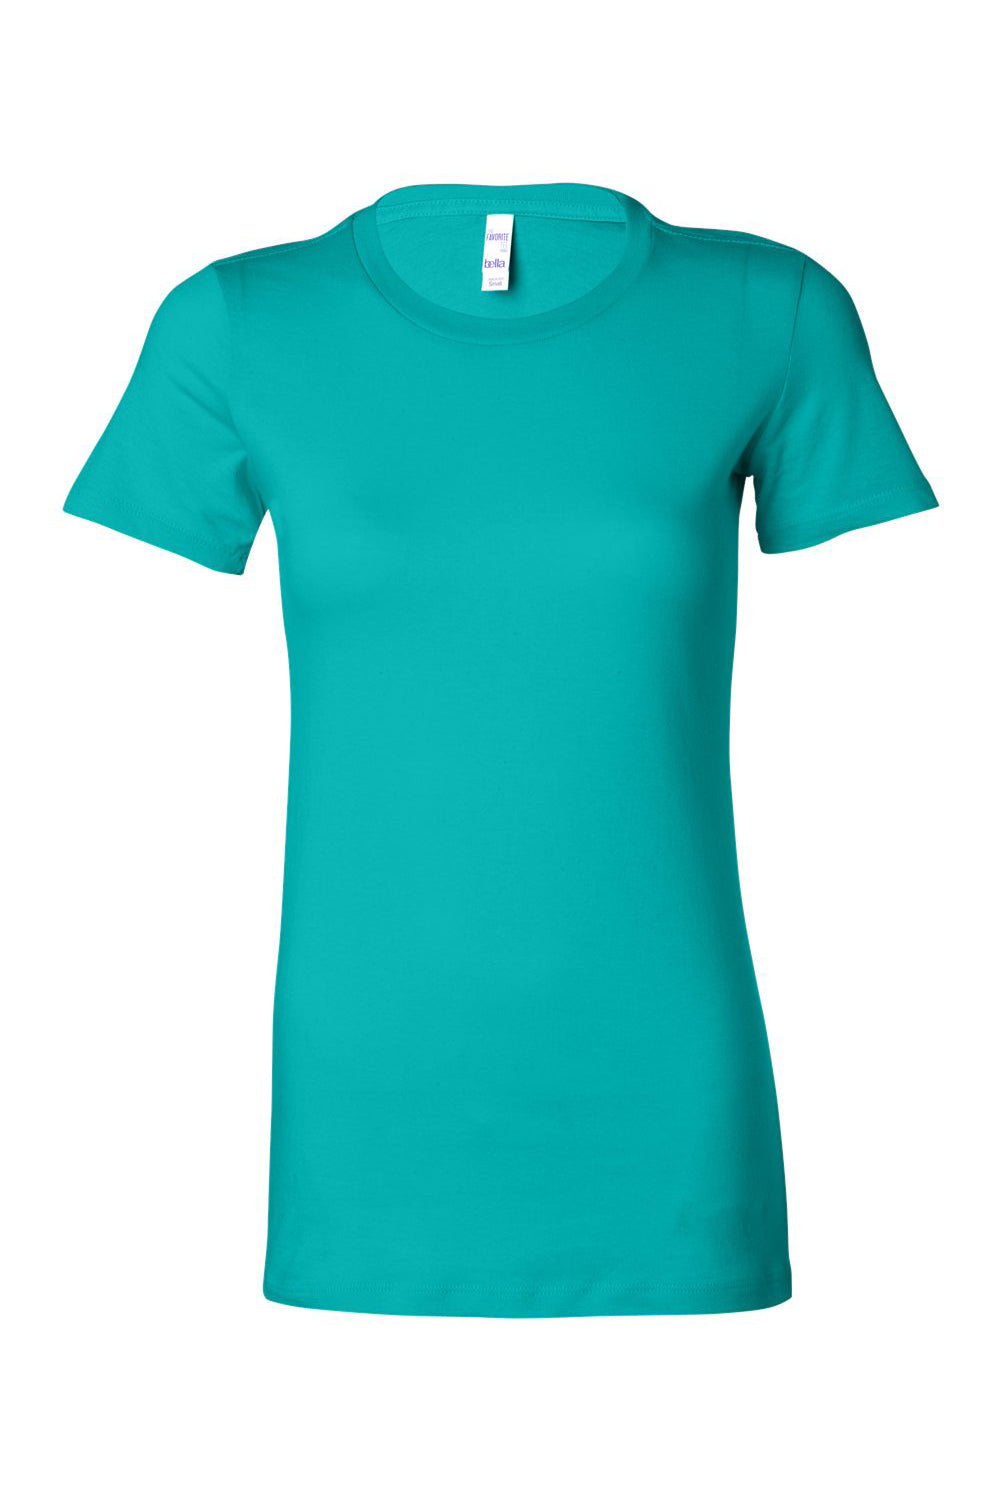 Bella + Canvas BC6004/6004 Womens The Favorite Short Sleeve Crewneck T-Shirt Teal Green Flat Front